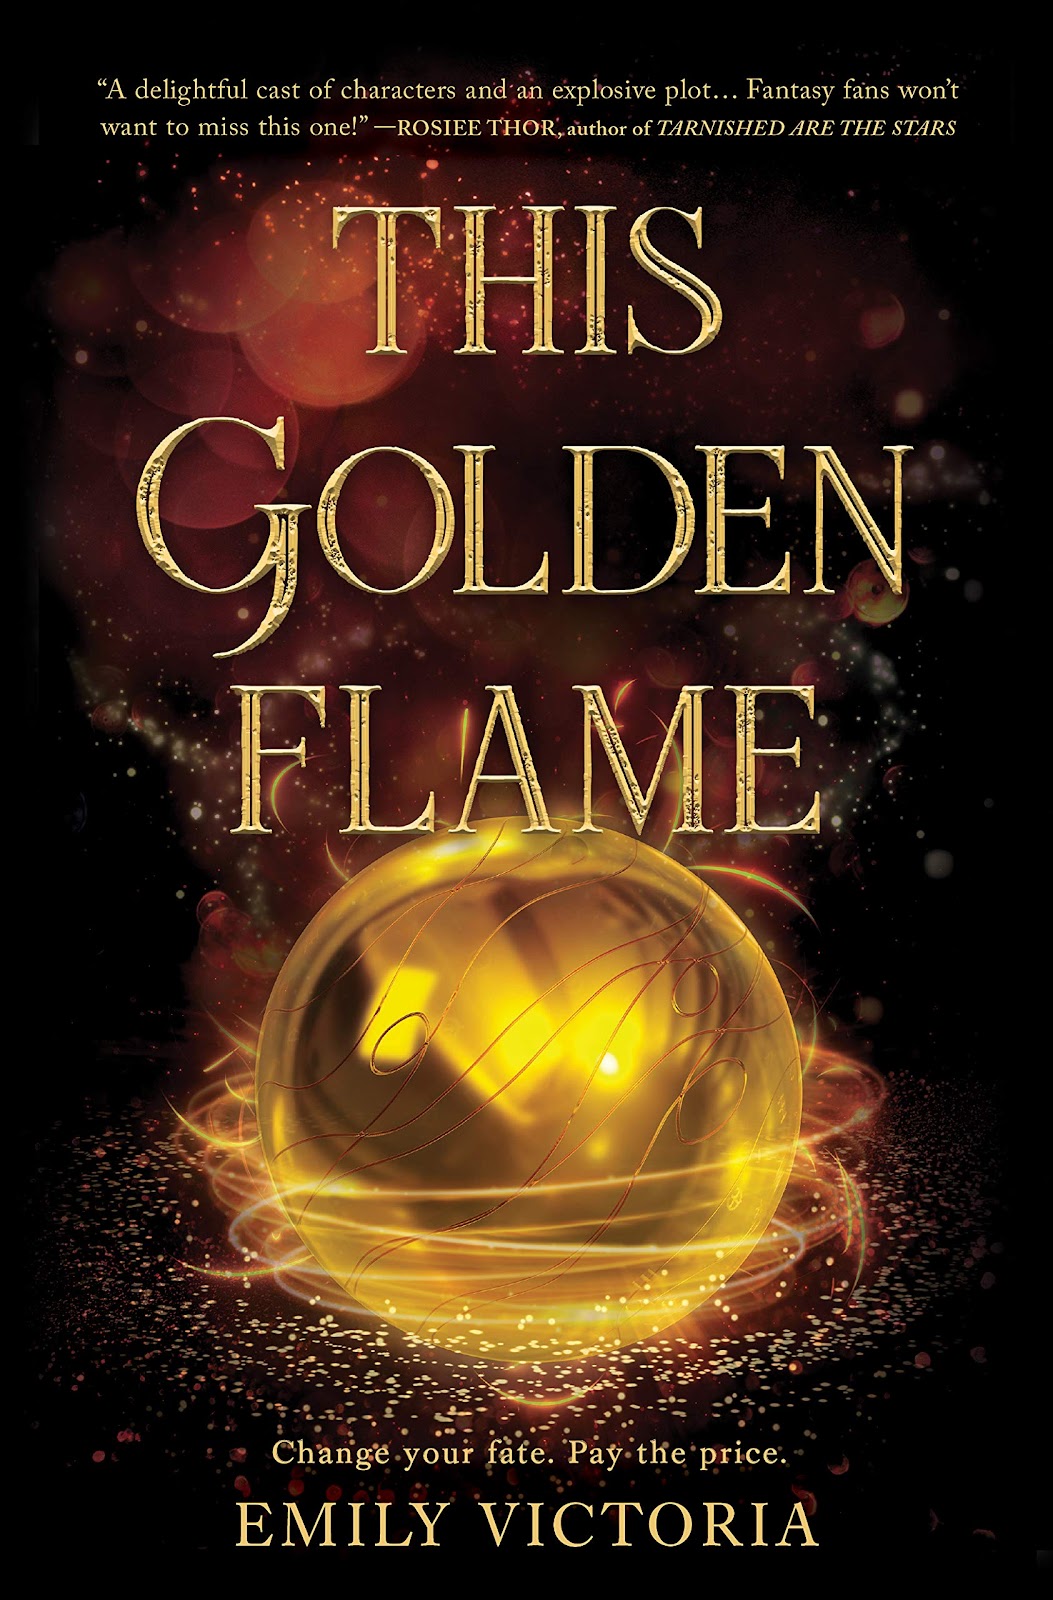 Amazon.com: This Golden Flame (9781335080271): Victoria, Emily: Books